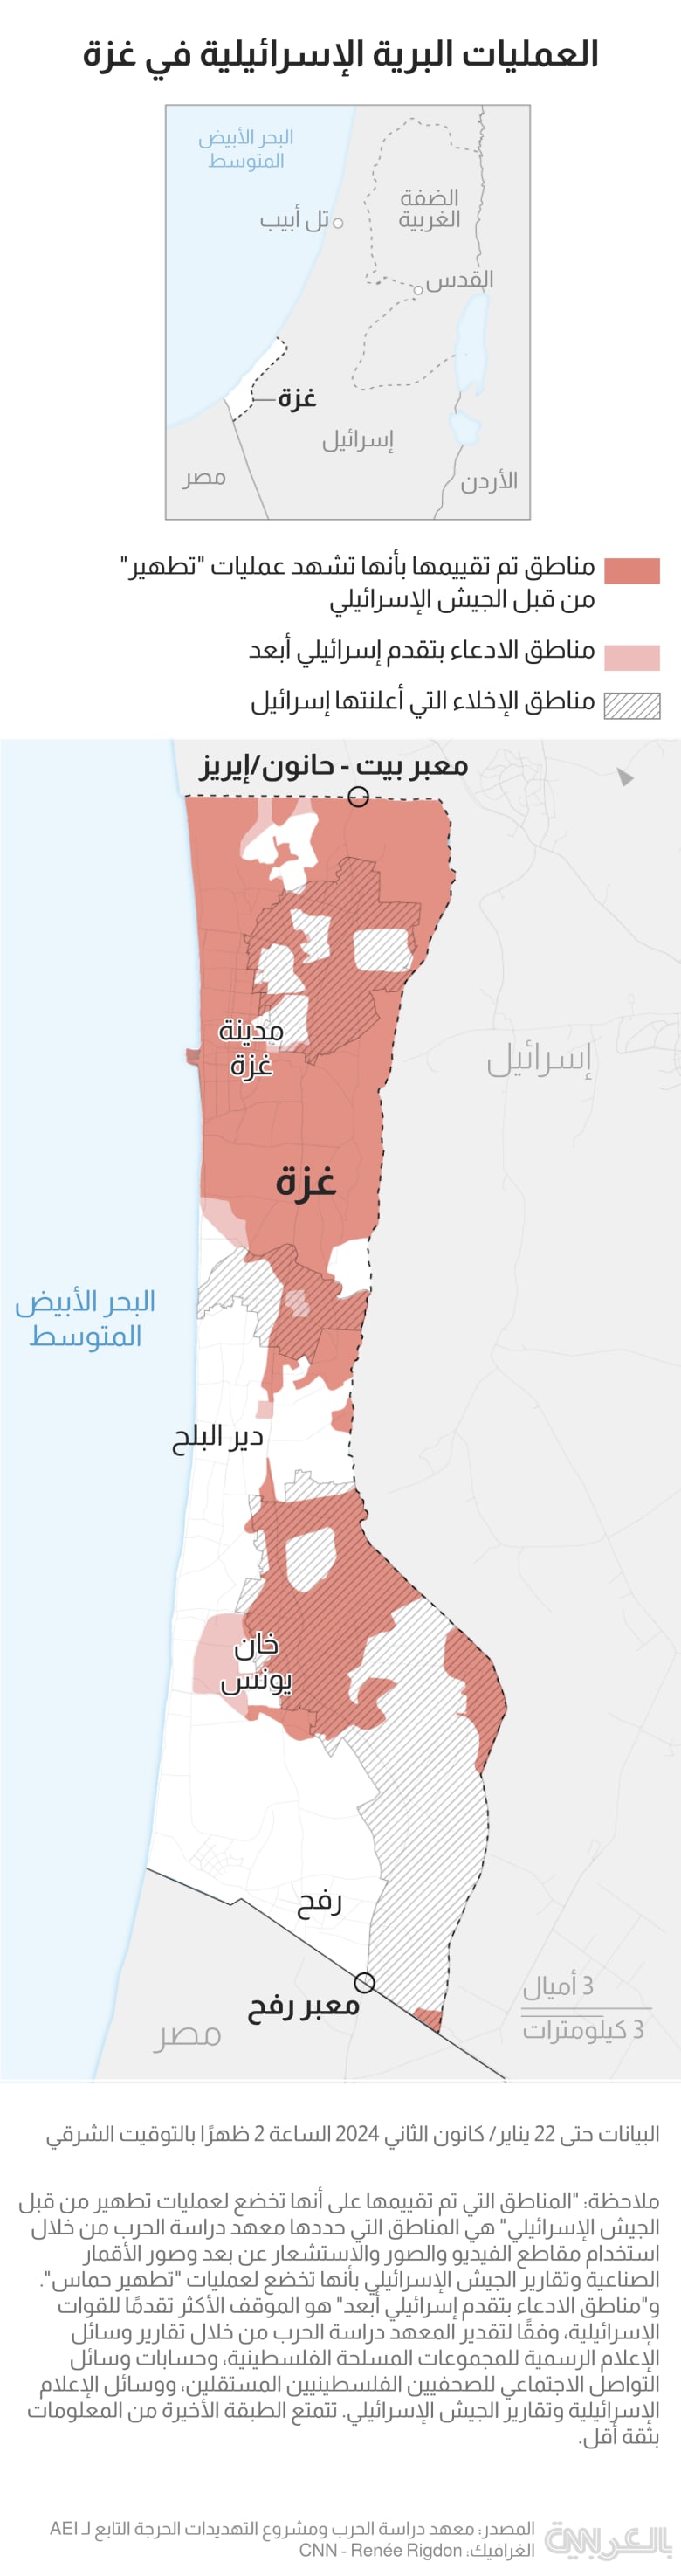 israel ground operation Gaza 240124